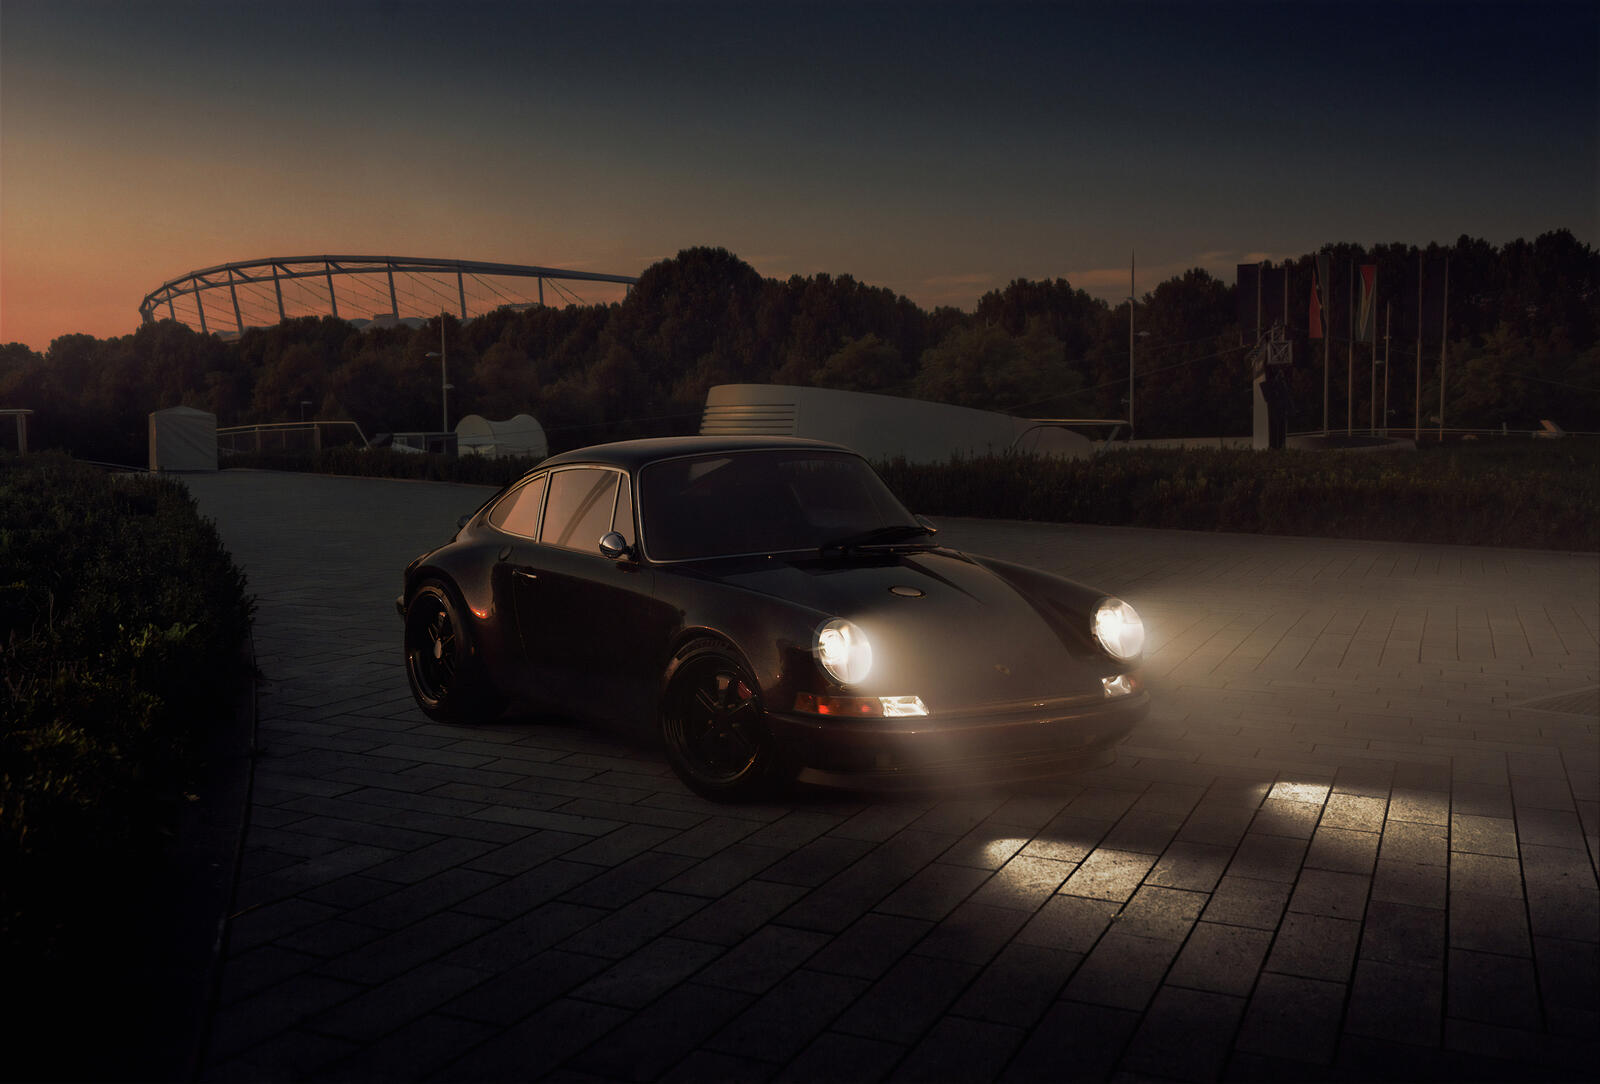 Free photo Porsche with headlights on